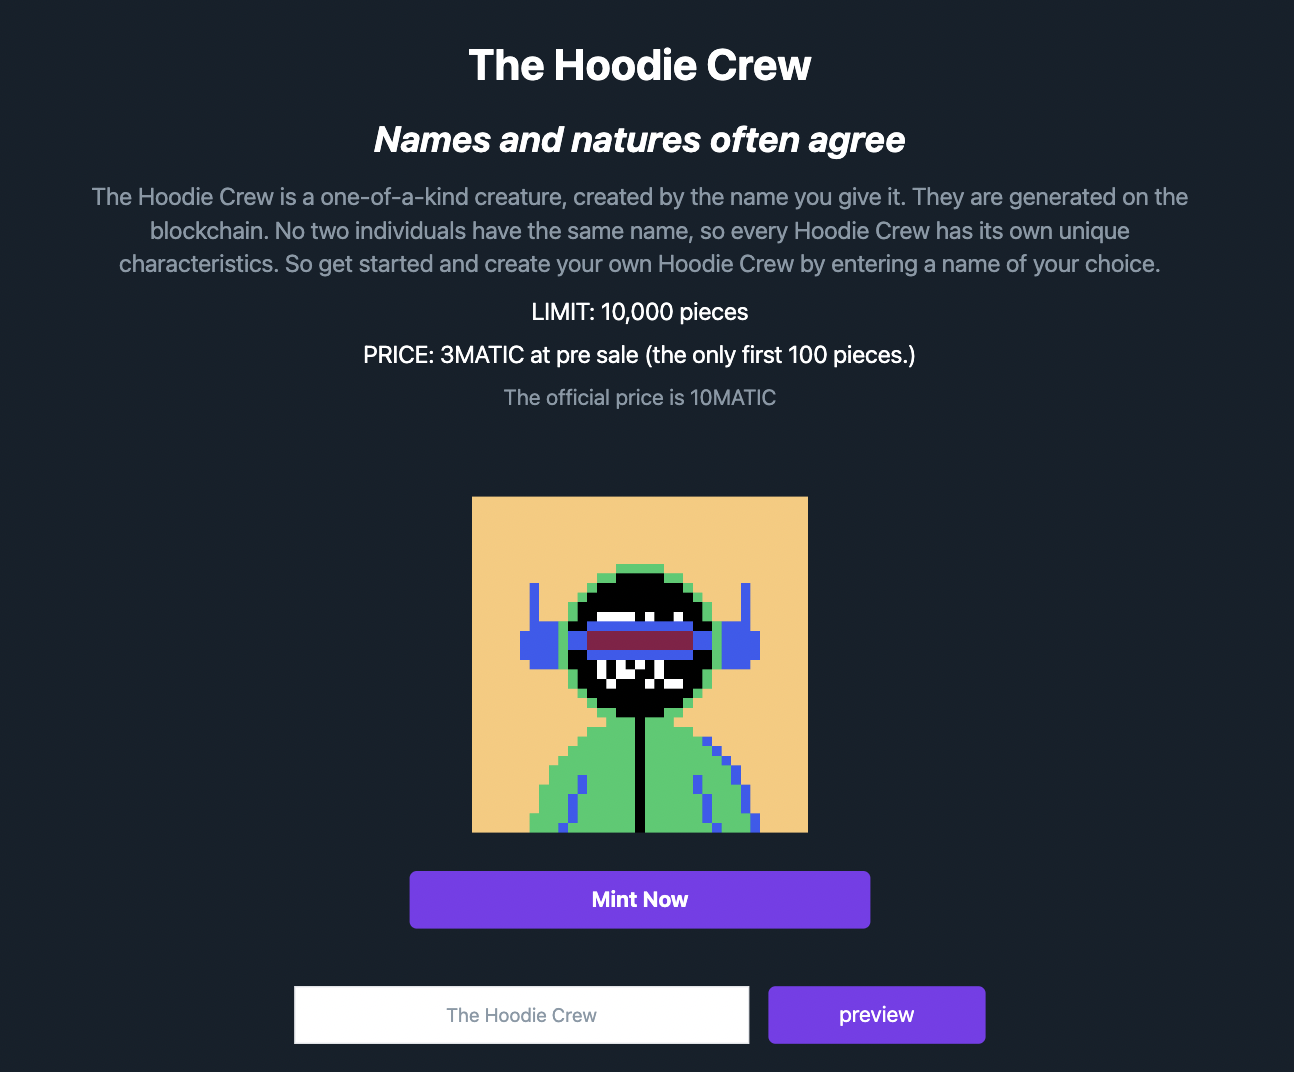 The Hoodie Crew